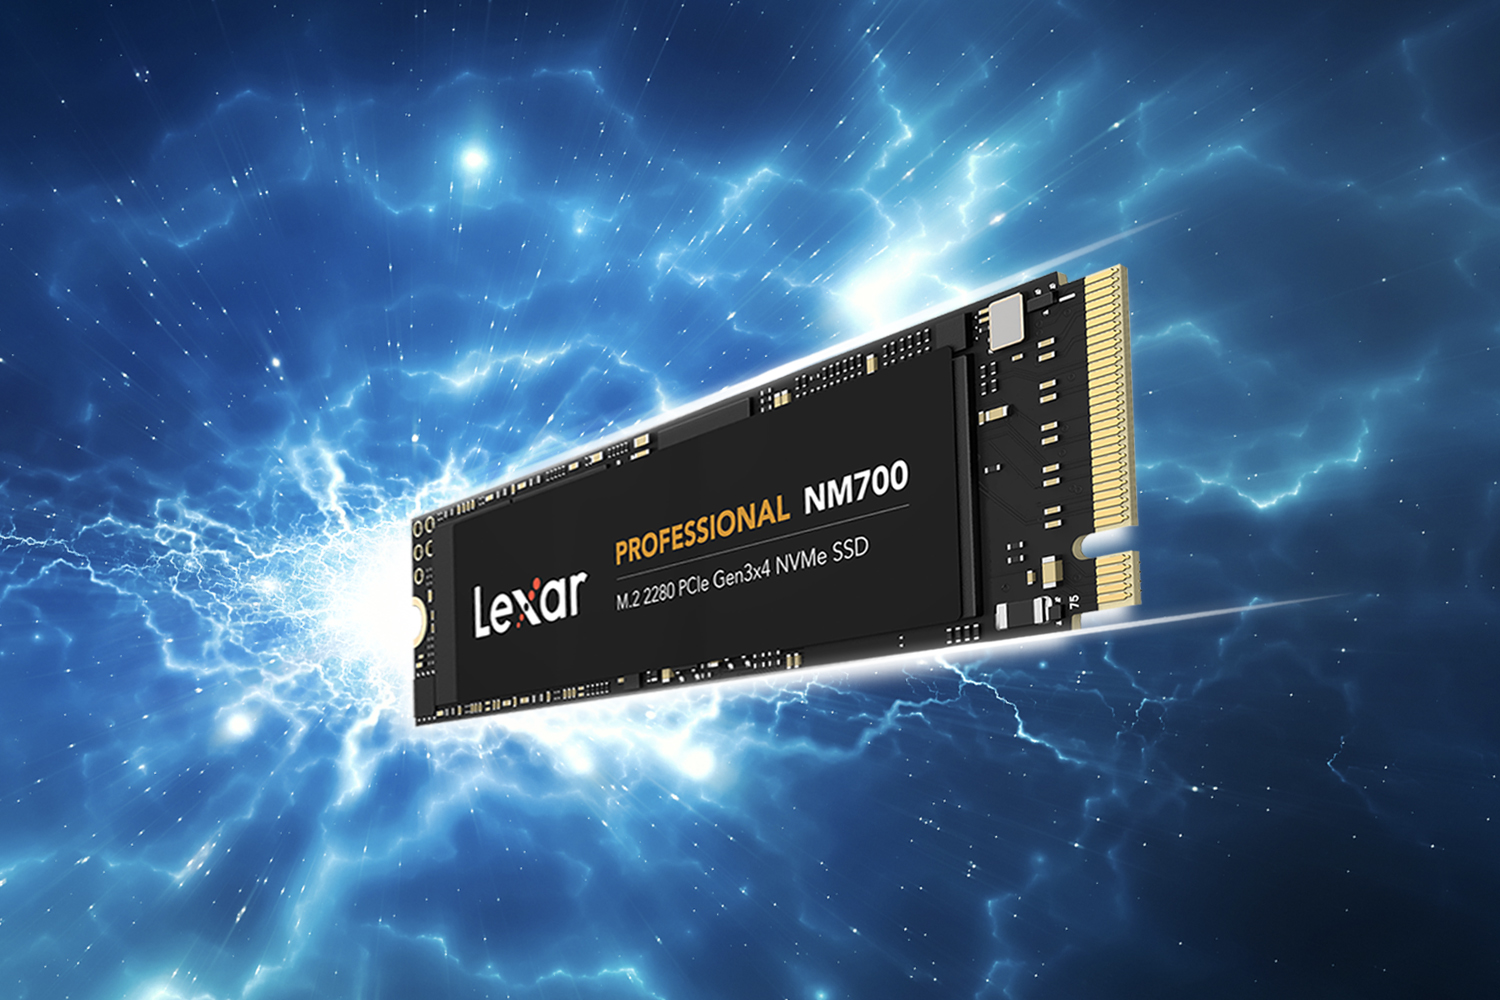 lexar profesisonal NM700 M.2 2280 NVMe SSD device on bright blue, white lightning background